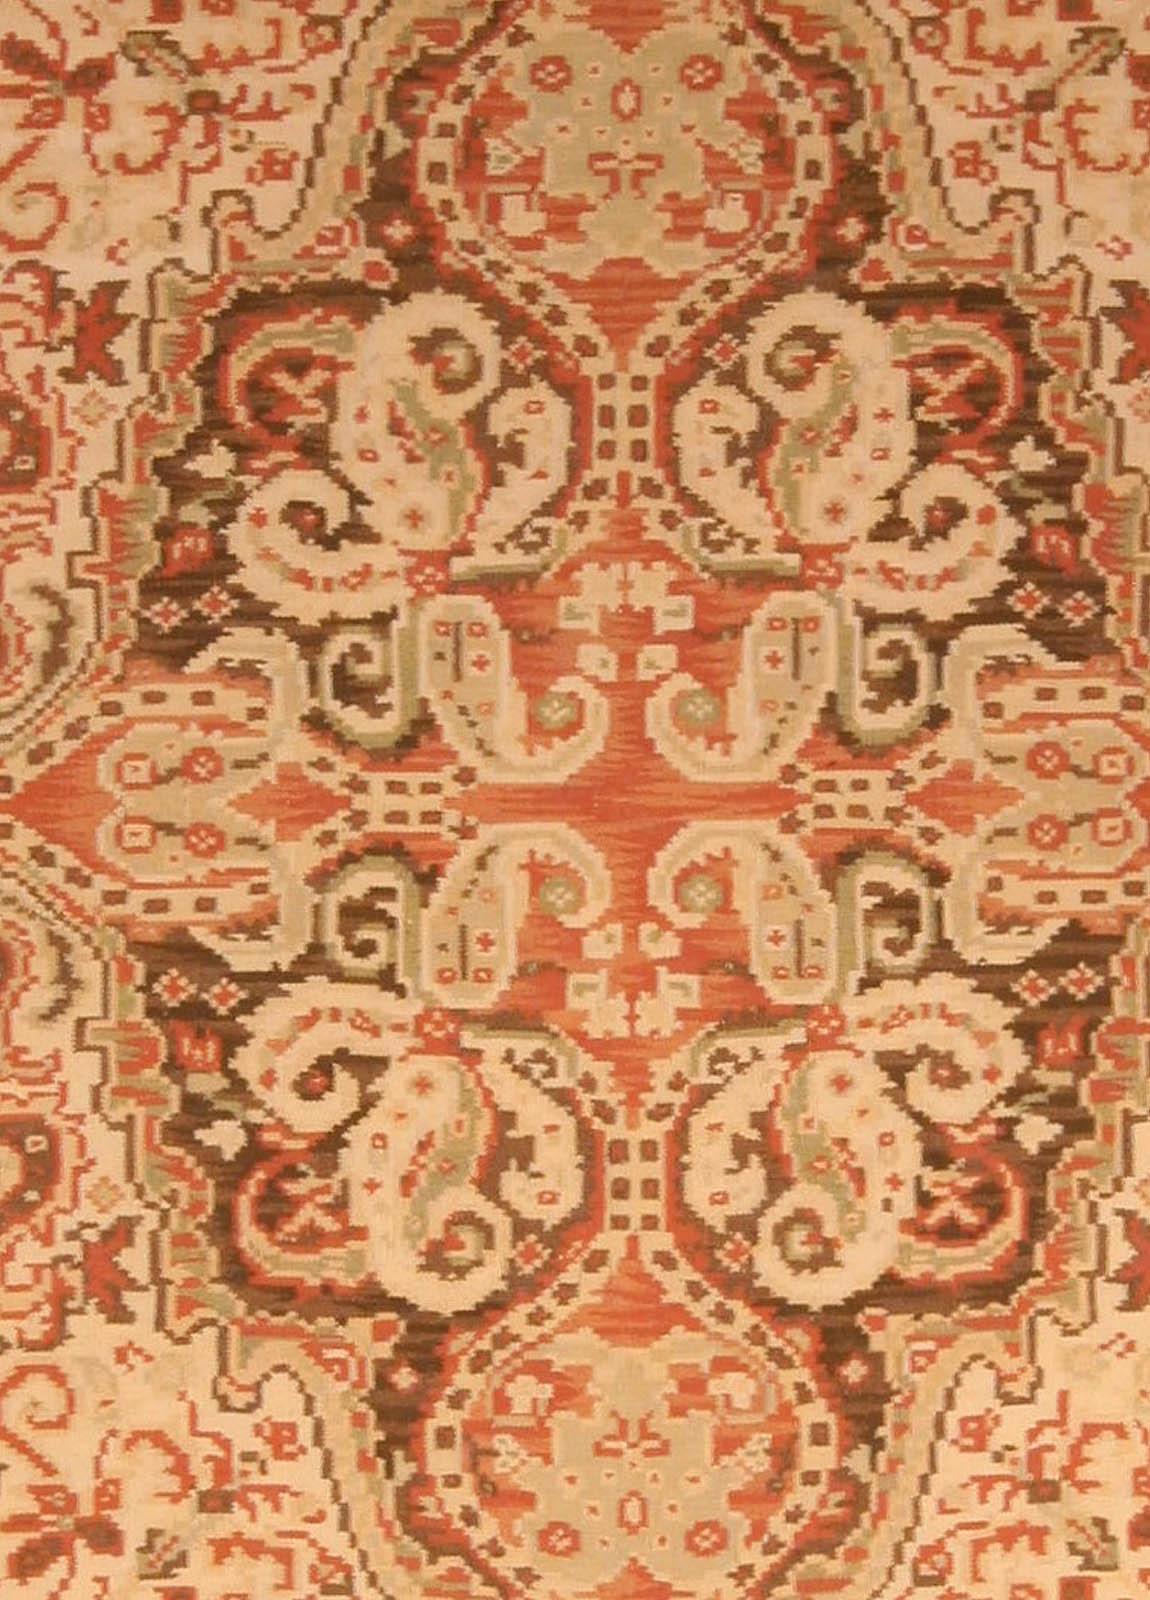 Contemporary floral, Bessarabian style handmade wool rug by Doris Leslie Blau.
Size: 9'5